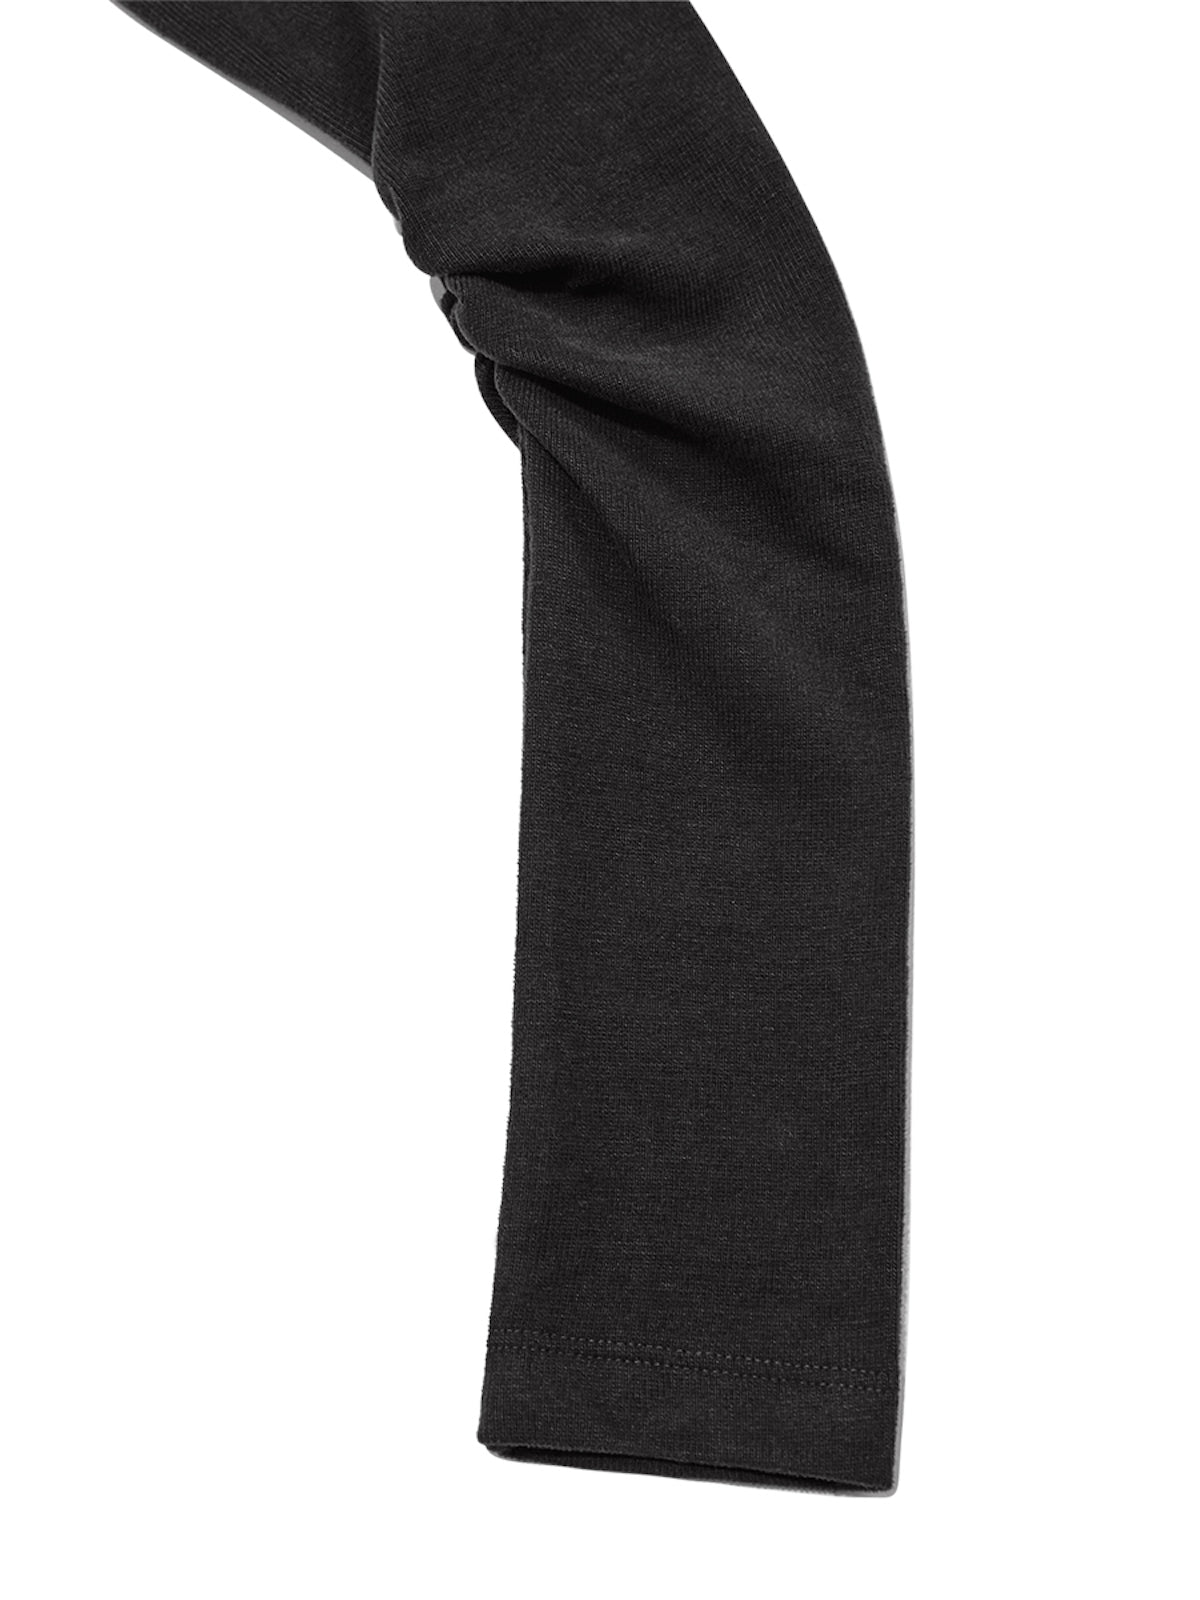 Rui Shirring Strap Long Sleeve In Charcoal